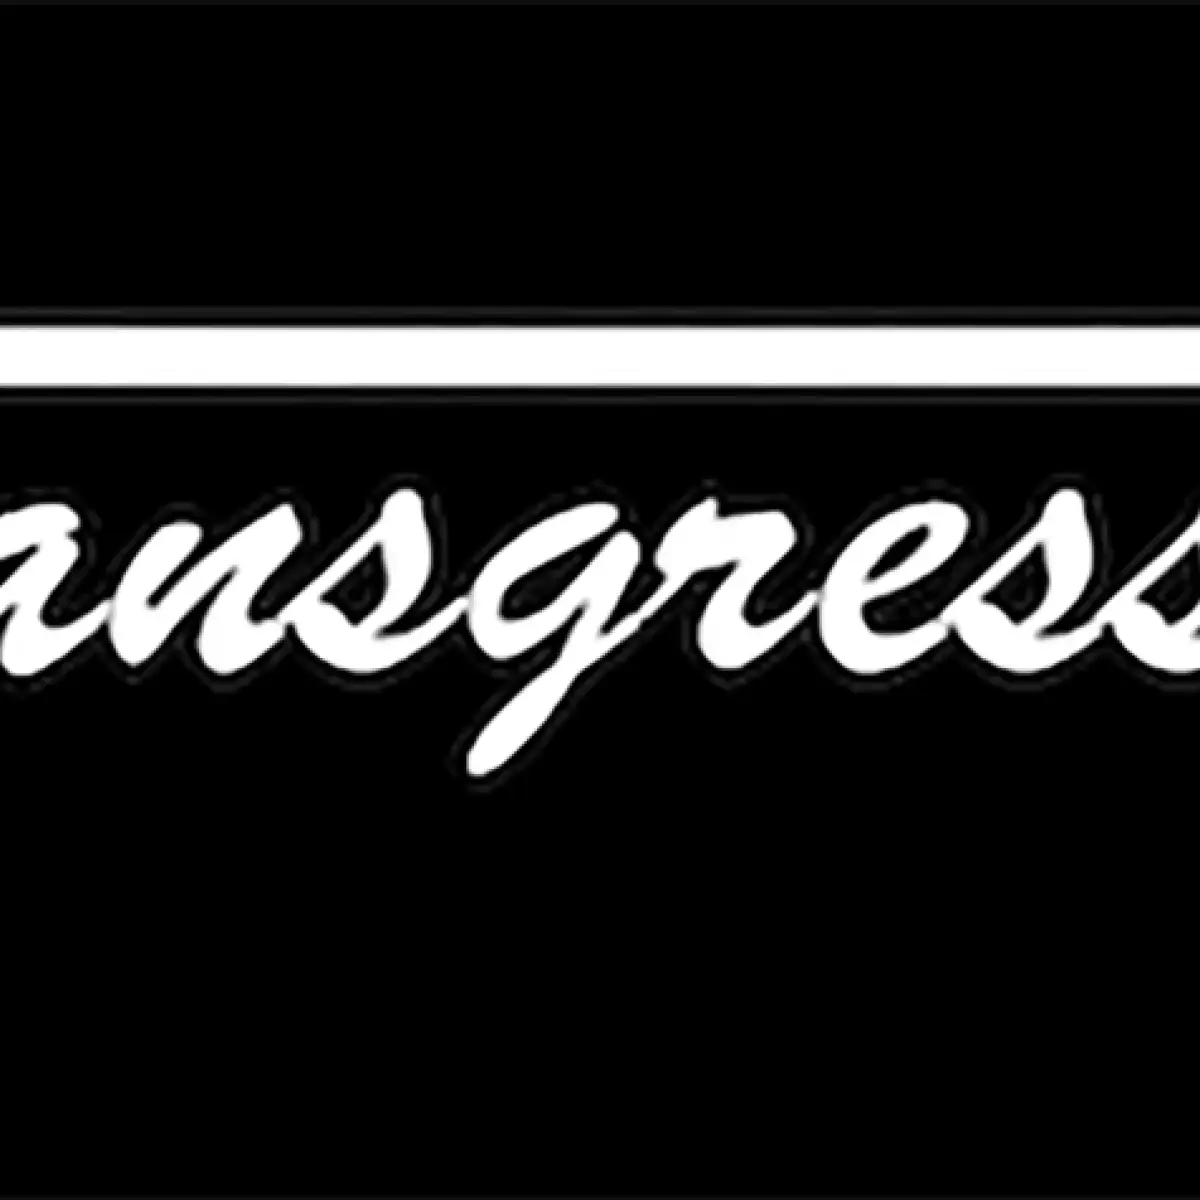 Transgressive DJs